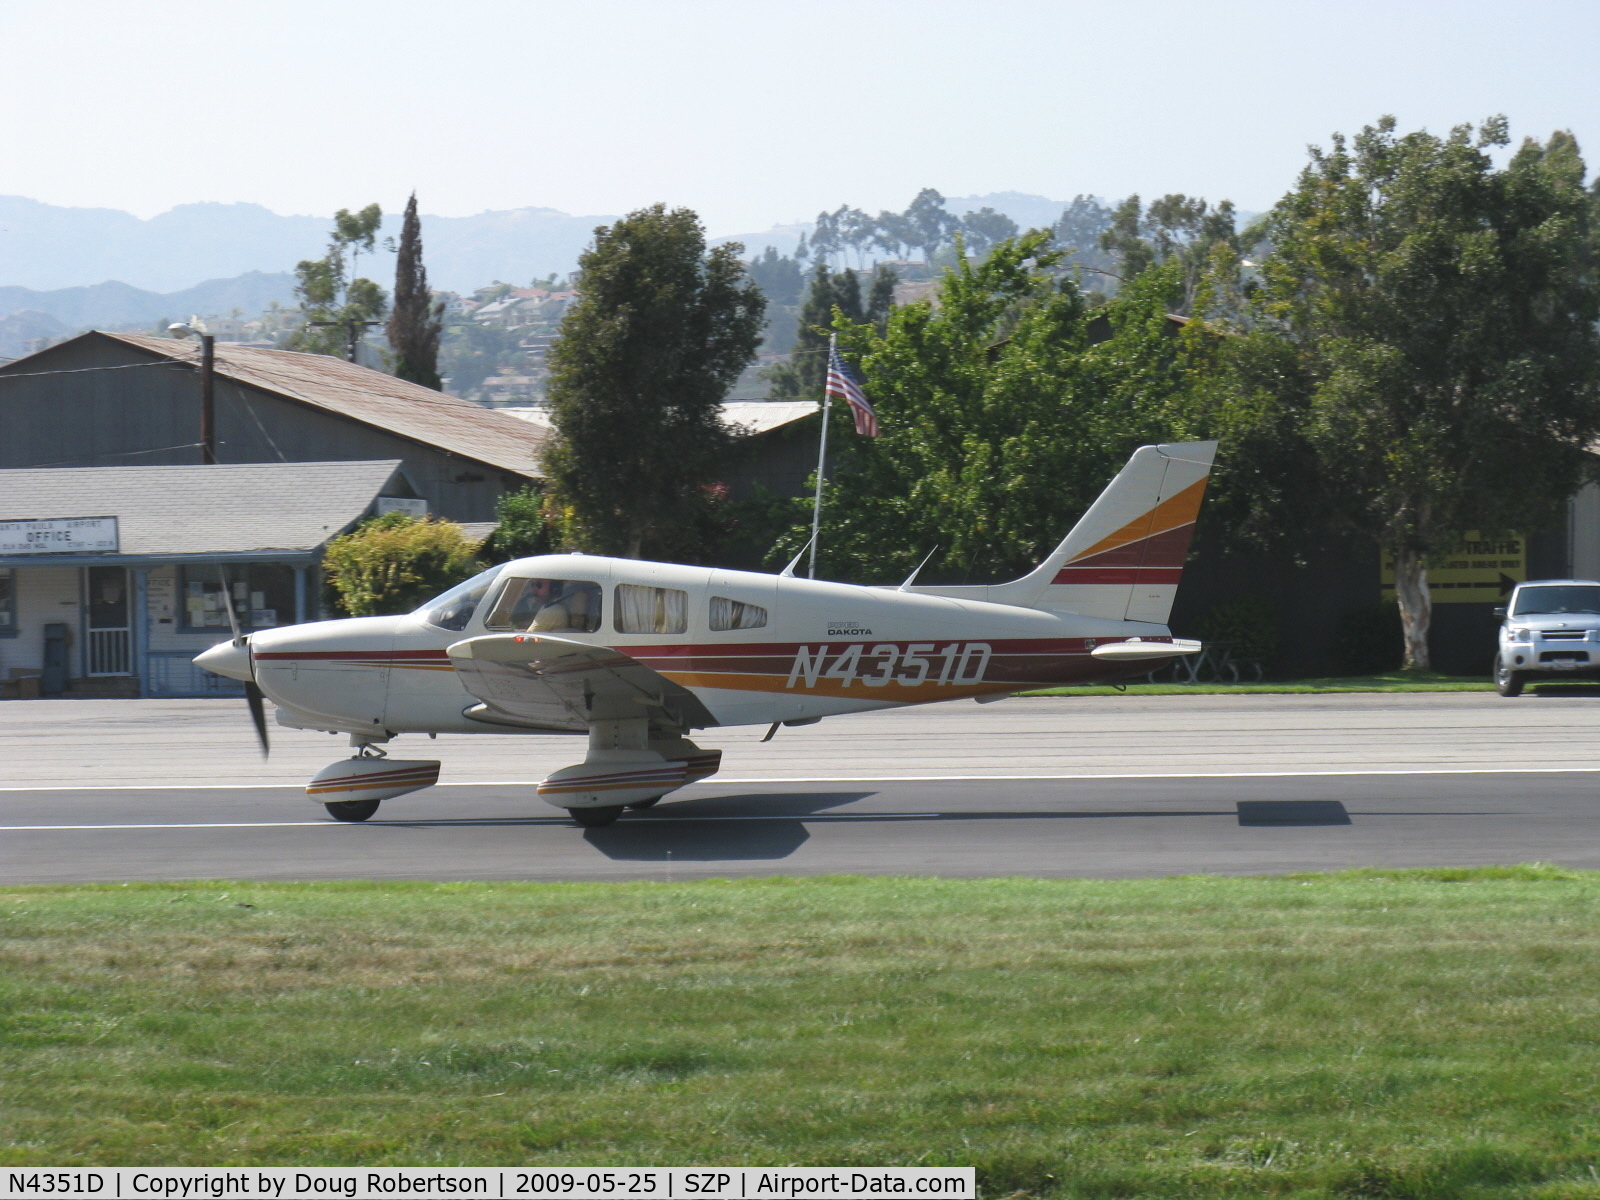 N4351D, 1984 Piper PA-28-236 Dakota C/N 28-8411016, 1984 Piper PA-28-236 DAKOTA, Lycoming O-540-J3A5D 235 hp, landing roll Rwy 22